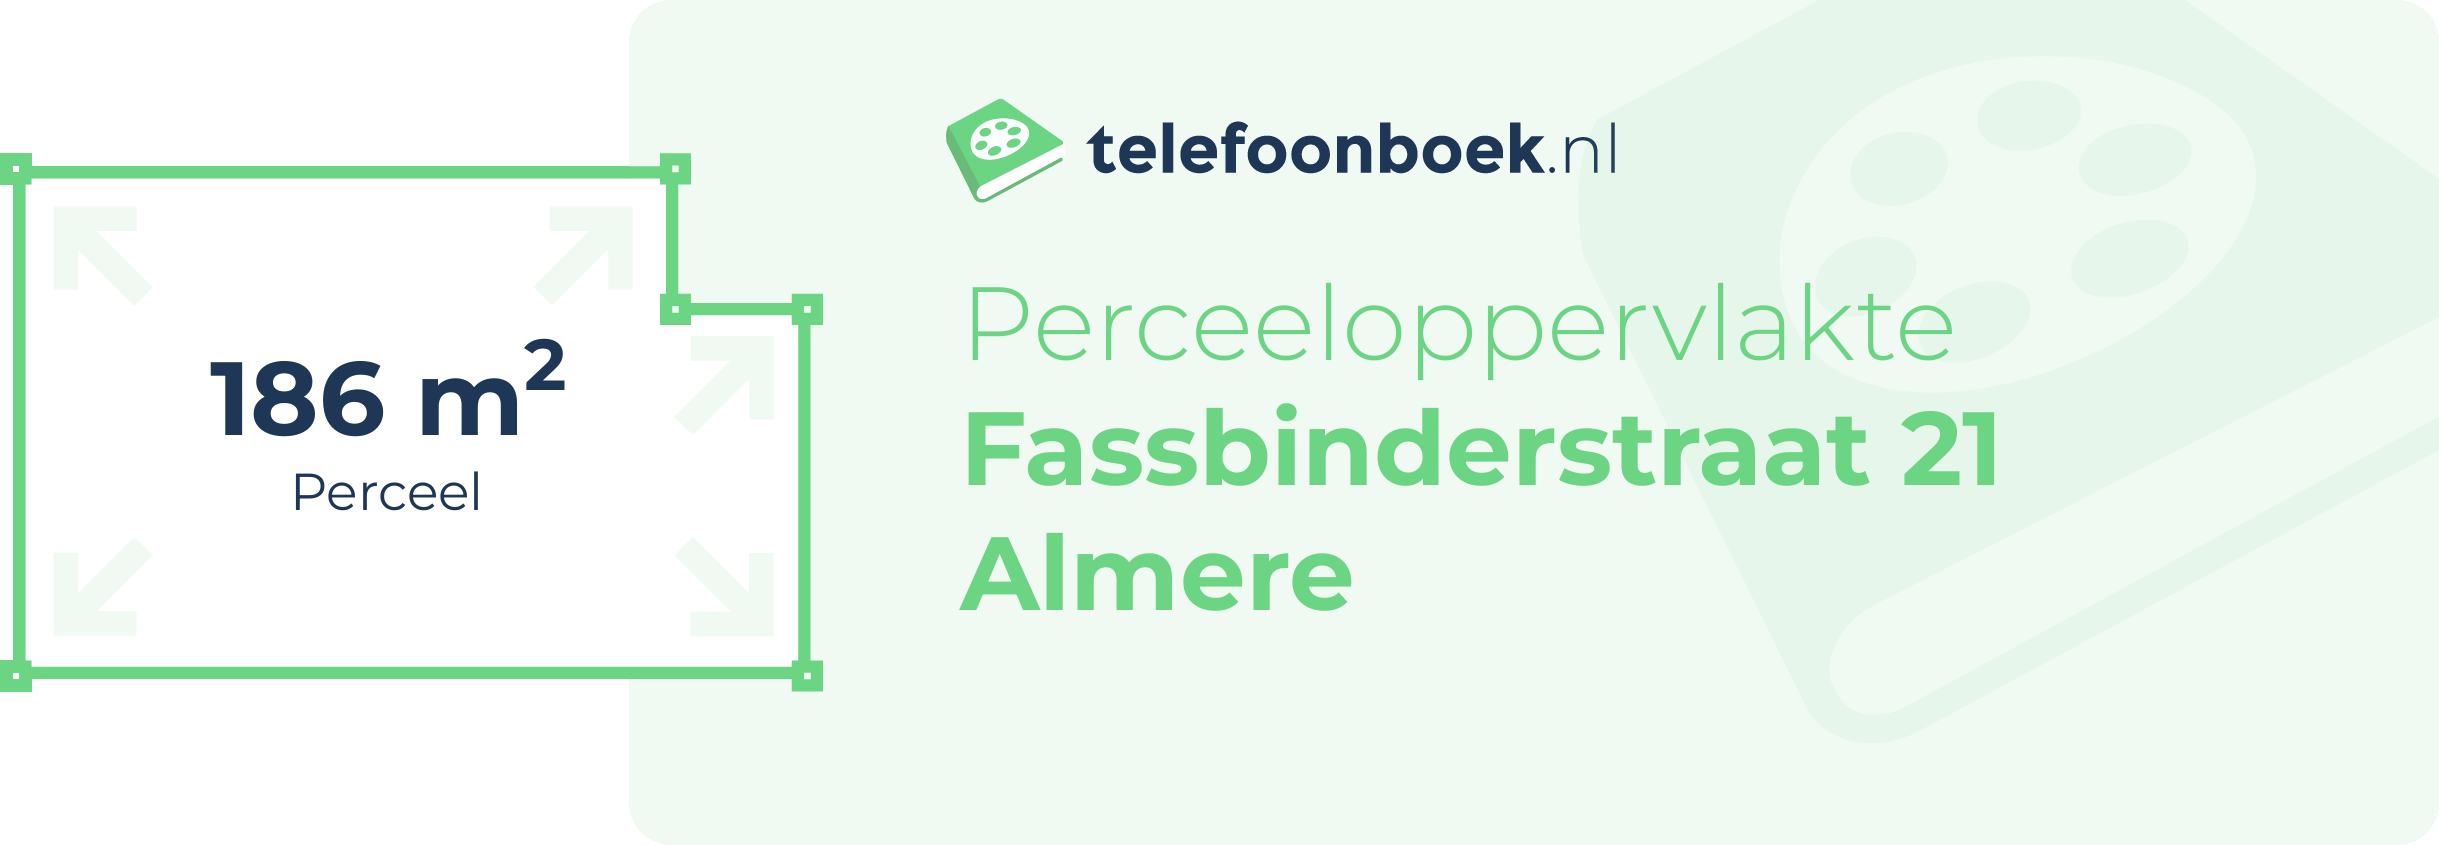 Perceeloppervlakte Fassbinderstraat 21 Almere